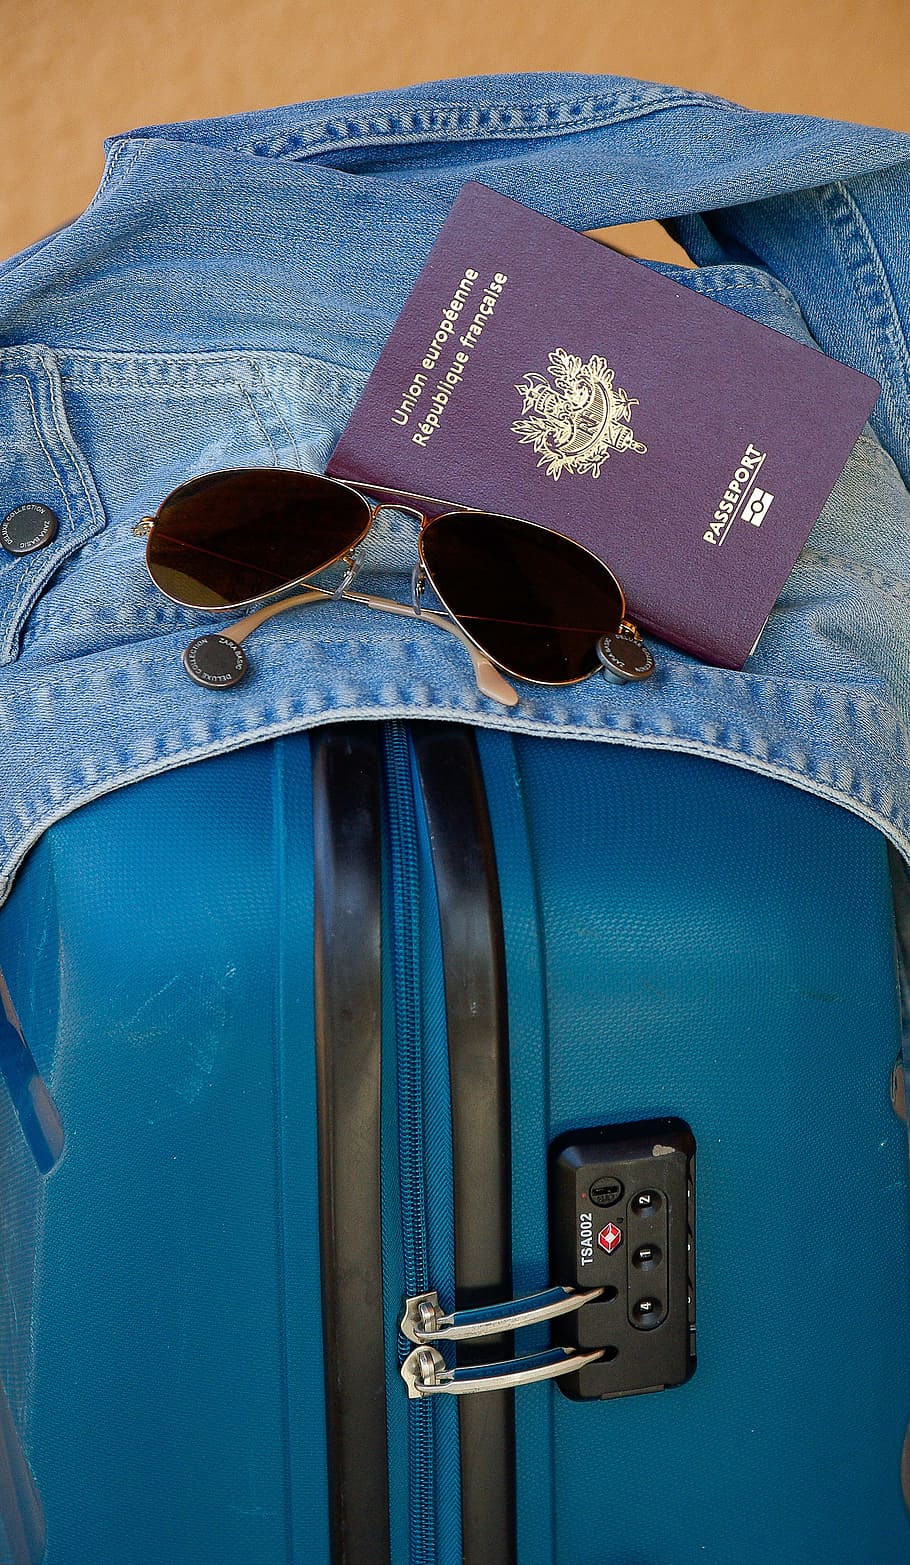 kacamata hitam penerbang, di samping, buku paspor, jaket denim, koper, keberangkatan, perjalanan, paspor, kacamata hitam, biru